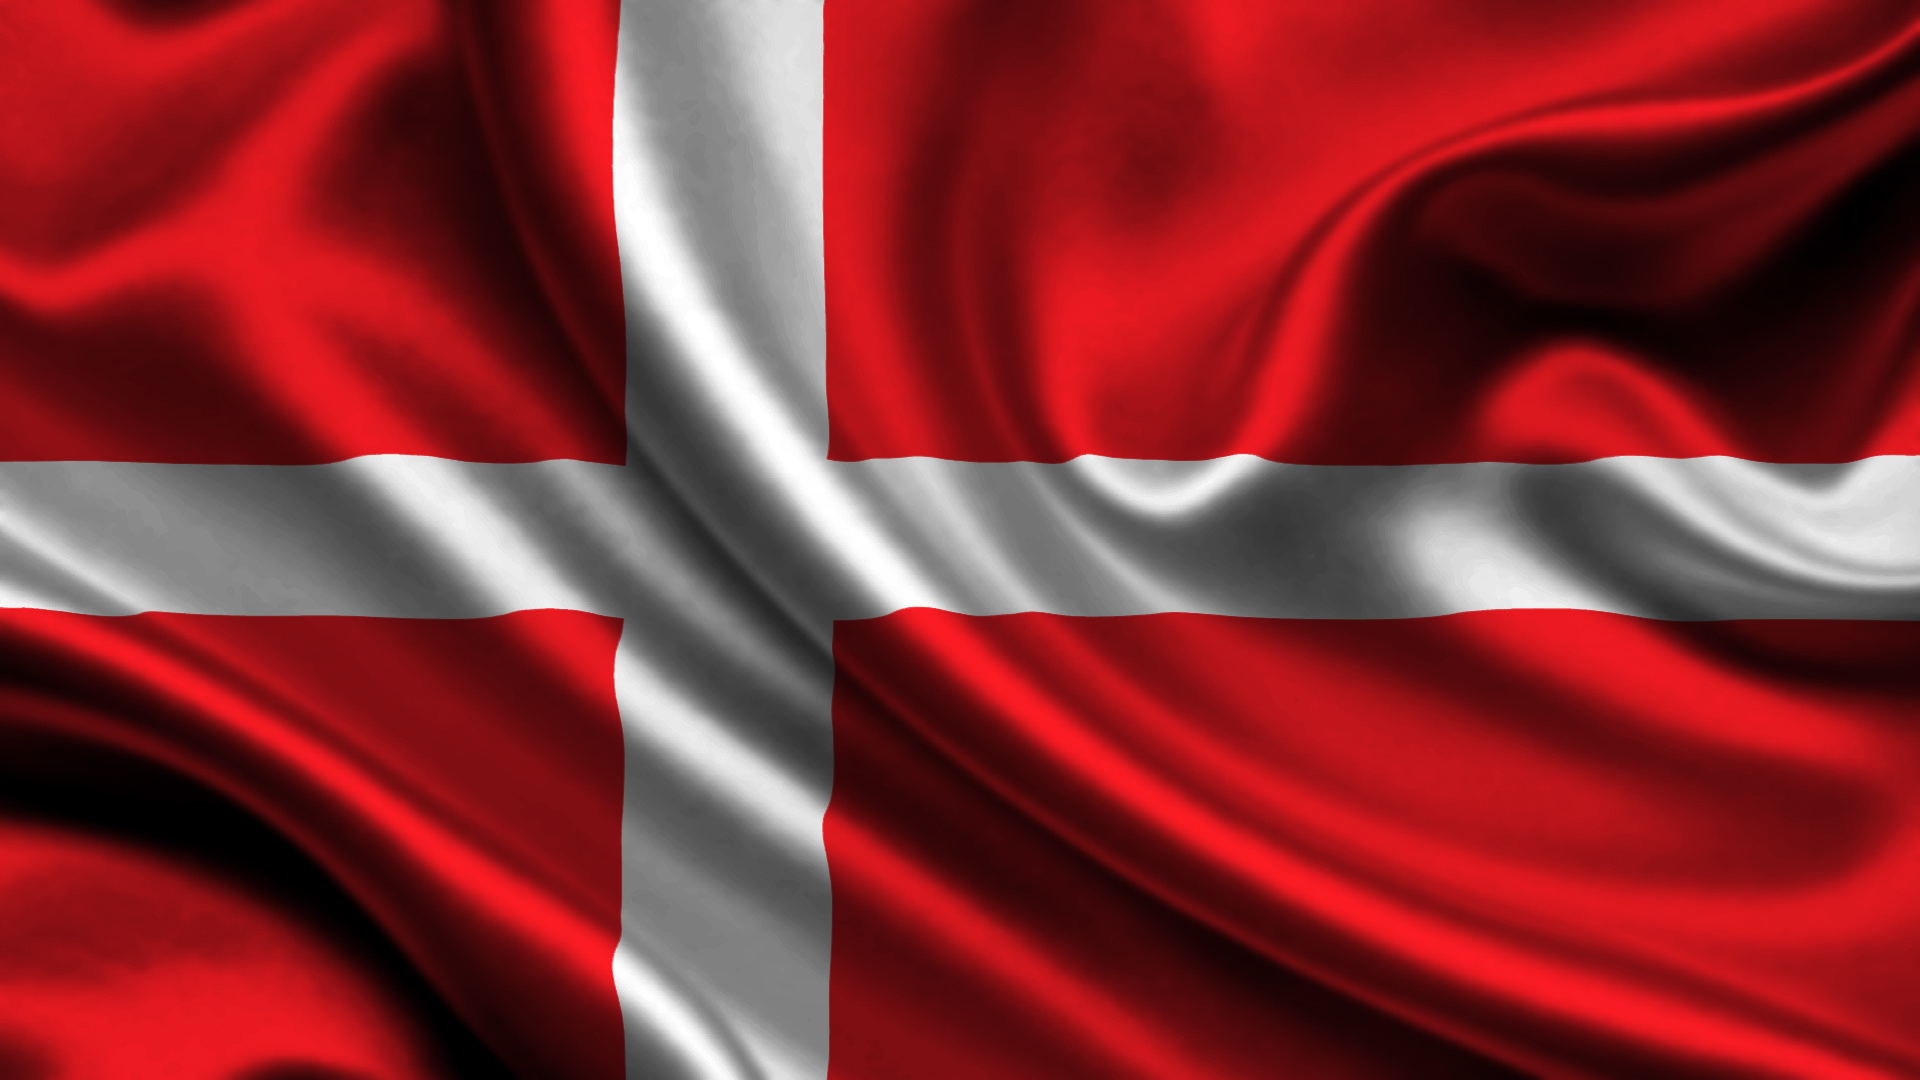 The Flag Of Denmark Has Many Variants So On Royal